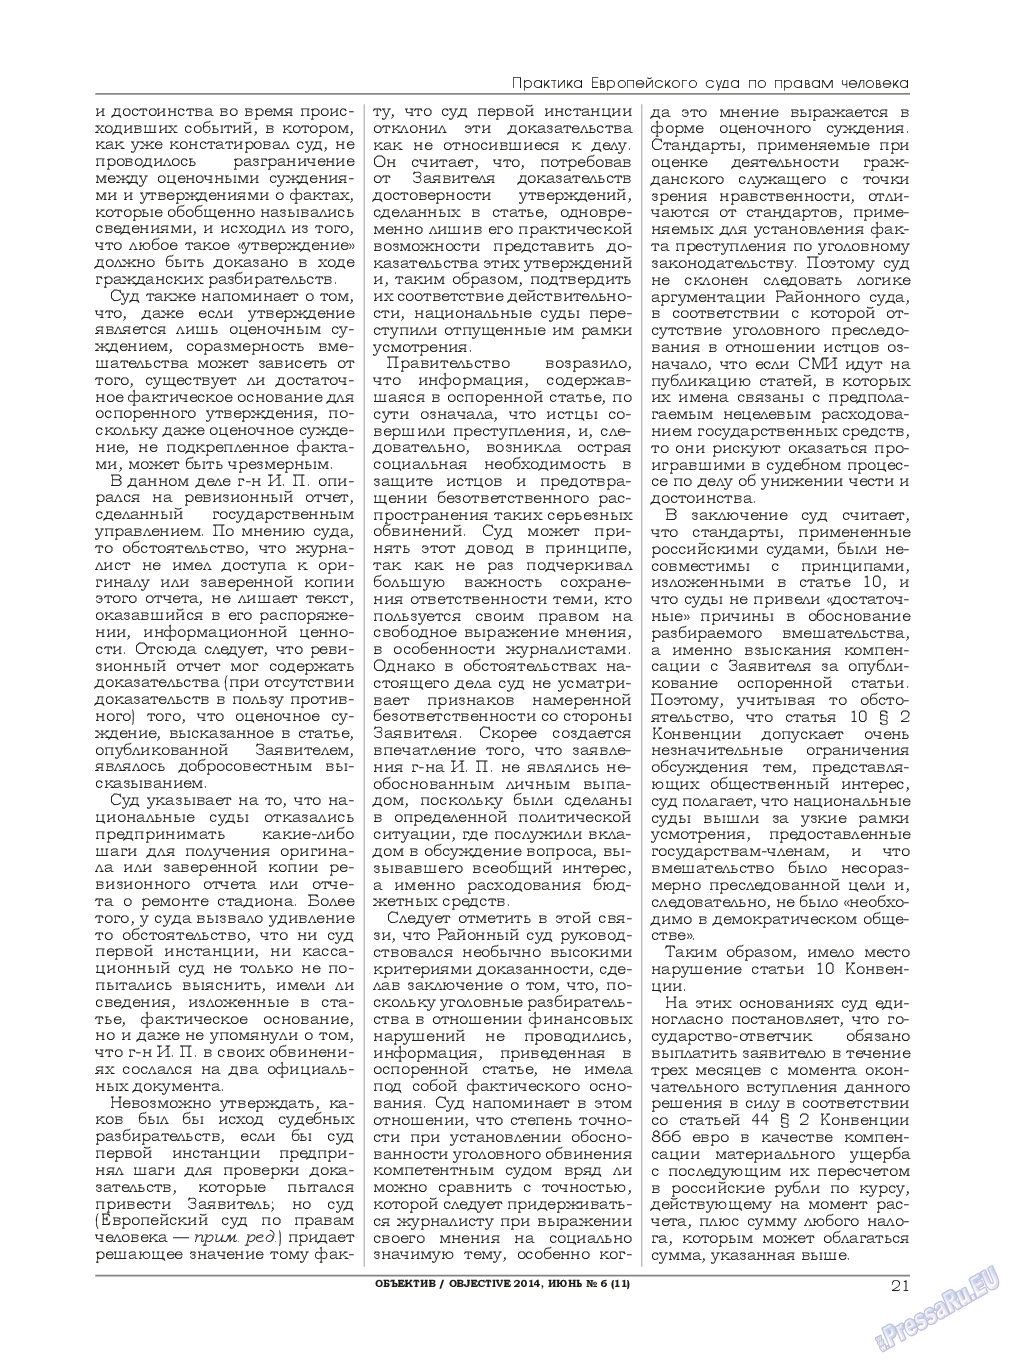 Объектив EU, журнал. 2014 №6 стр.21